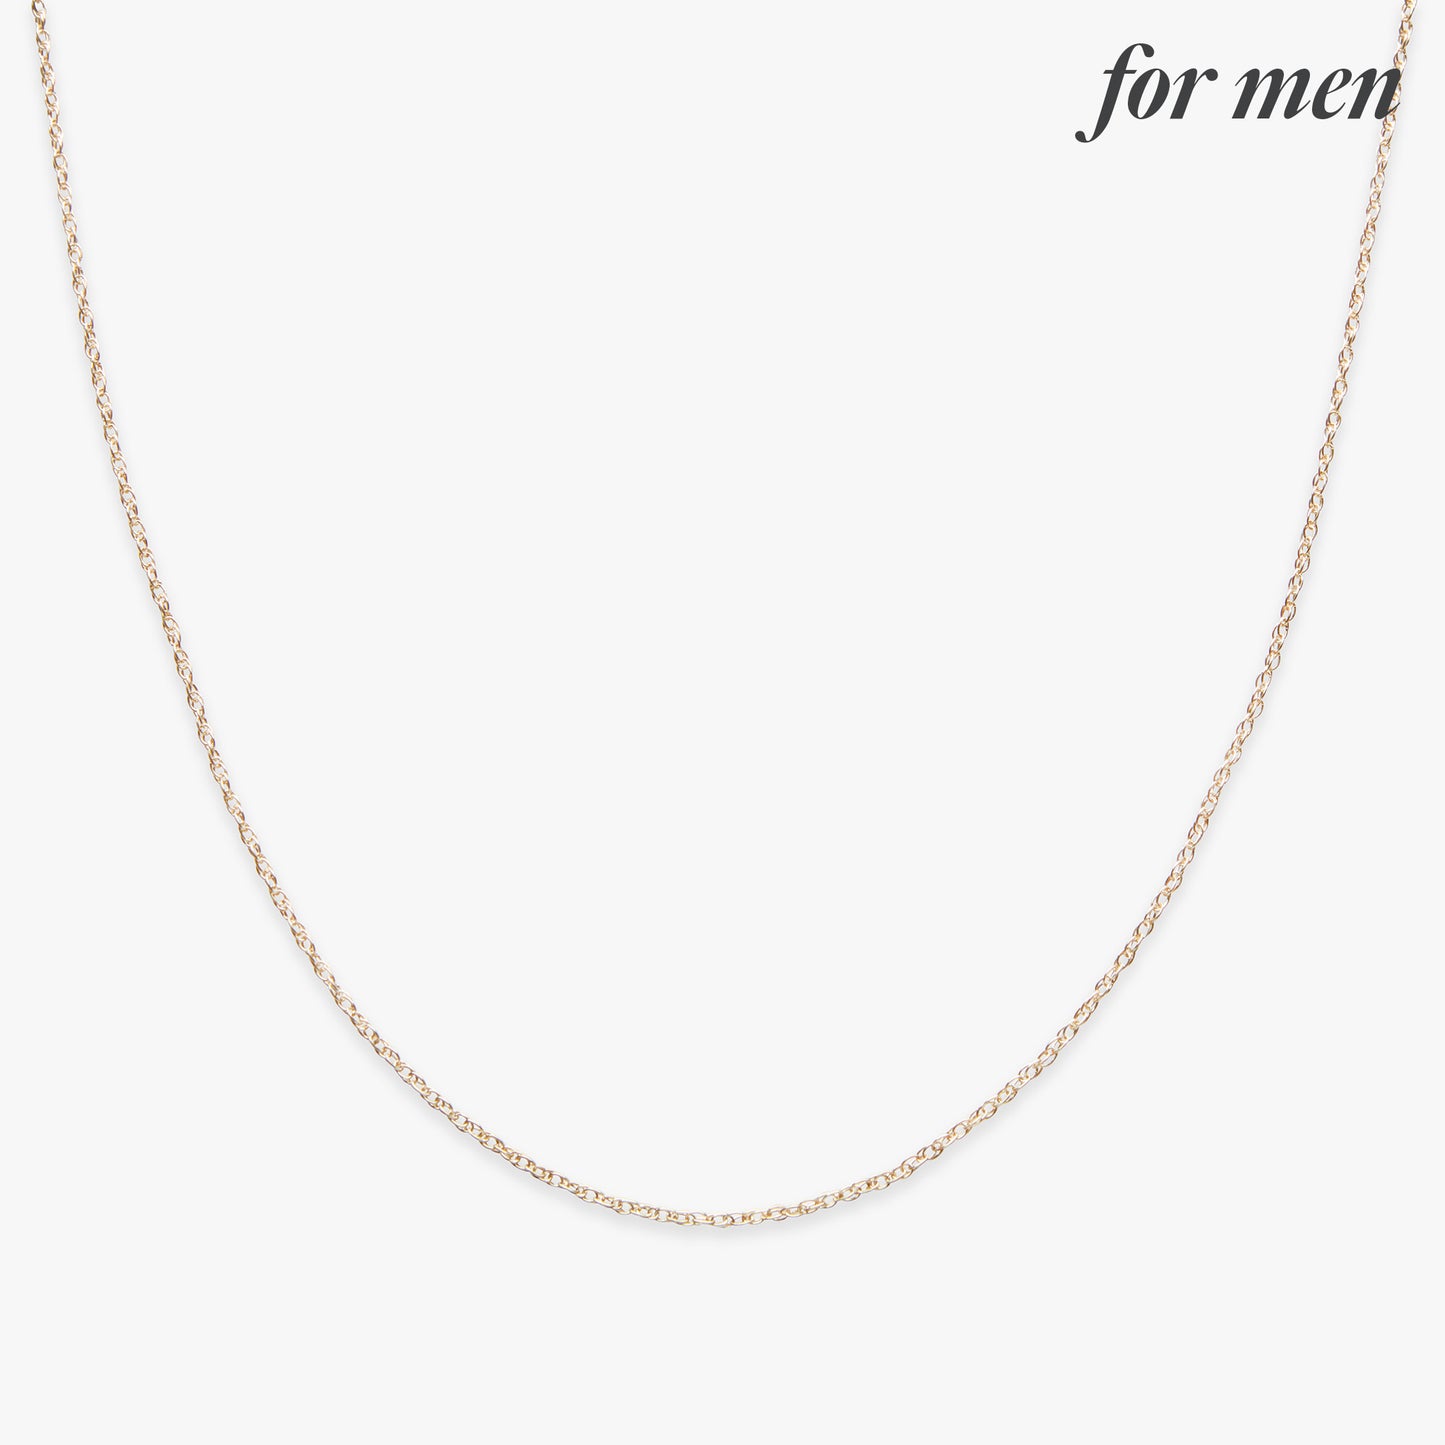 Basic twist chain ketting gold filled voor mannen